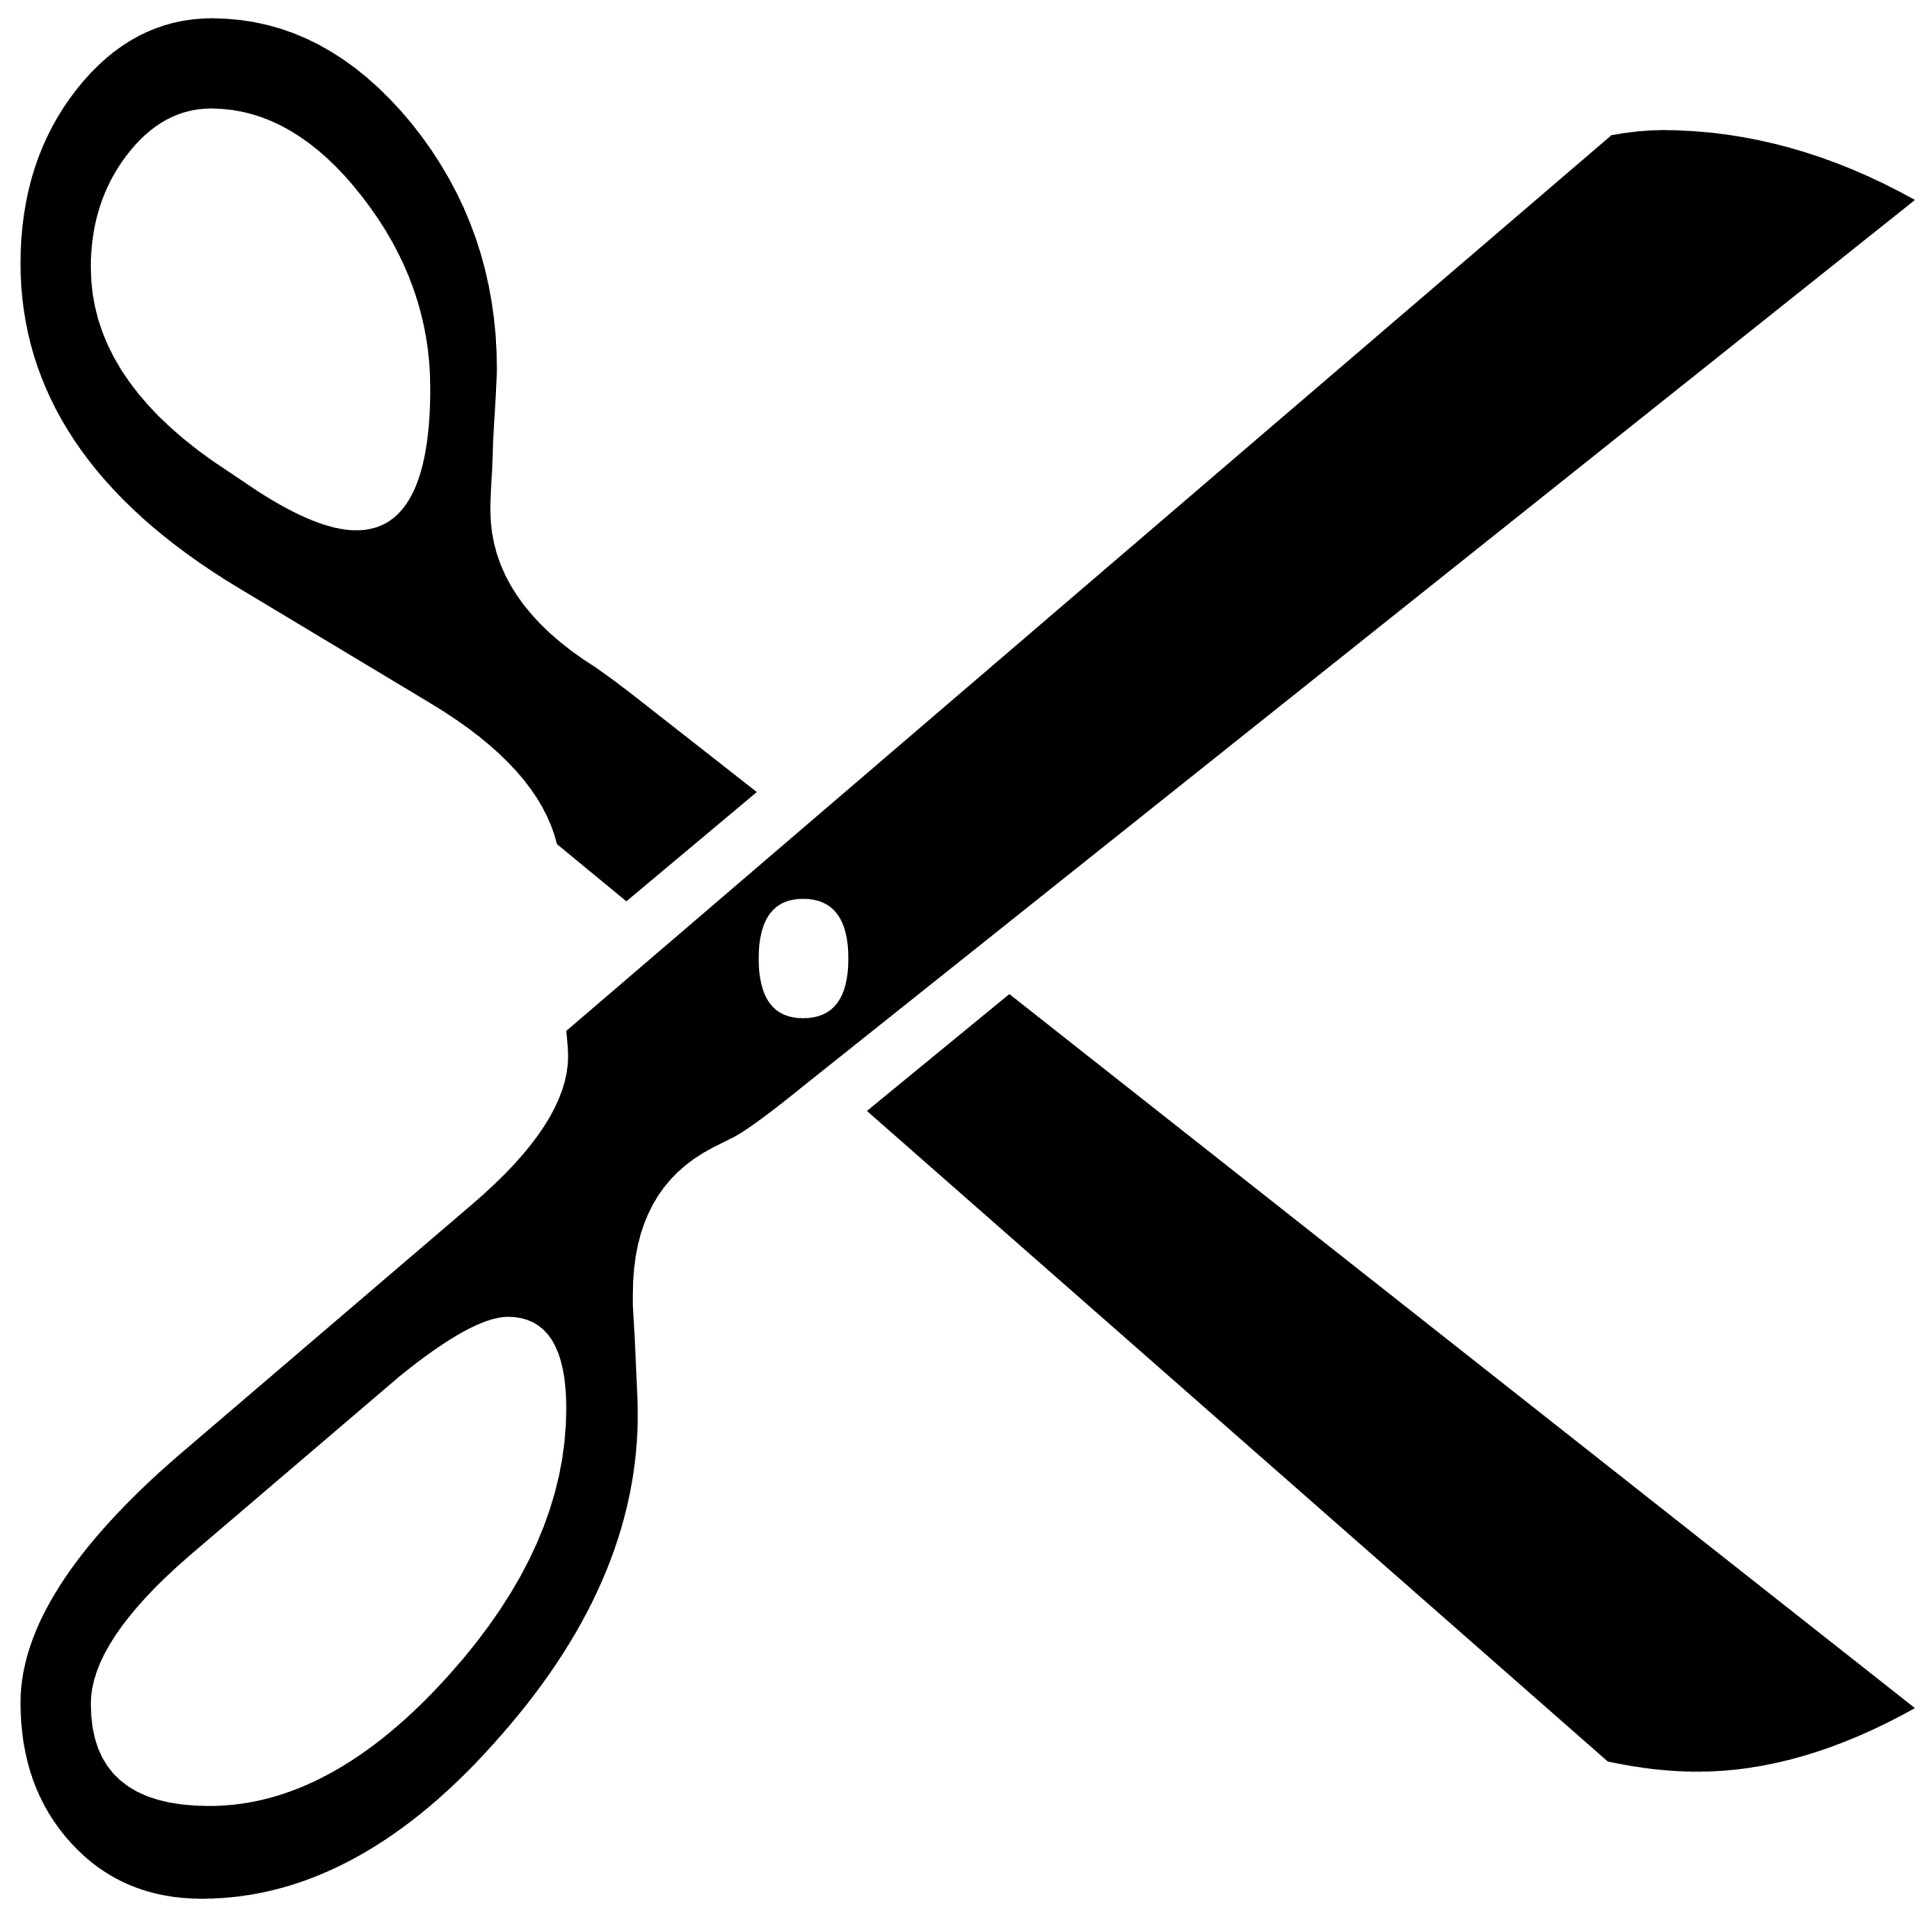 scissors clipart in word - photo #14